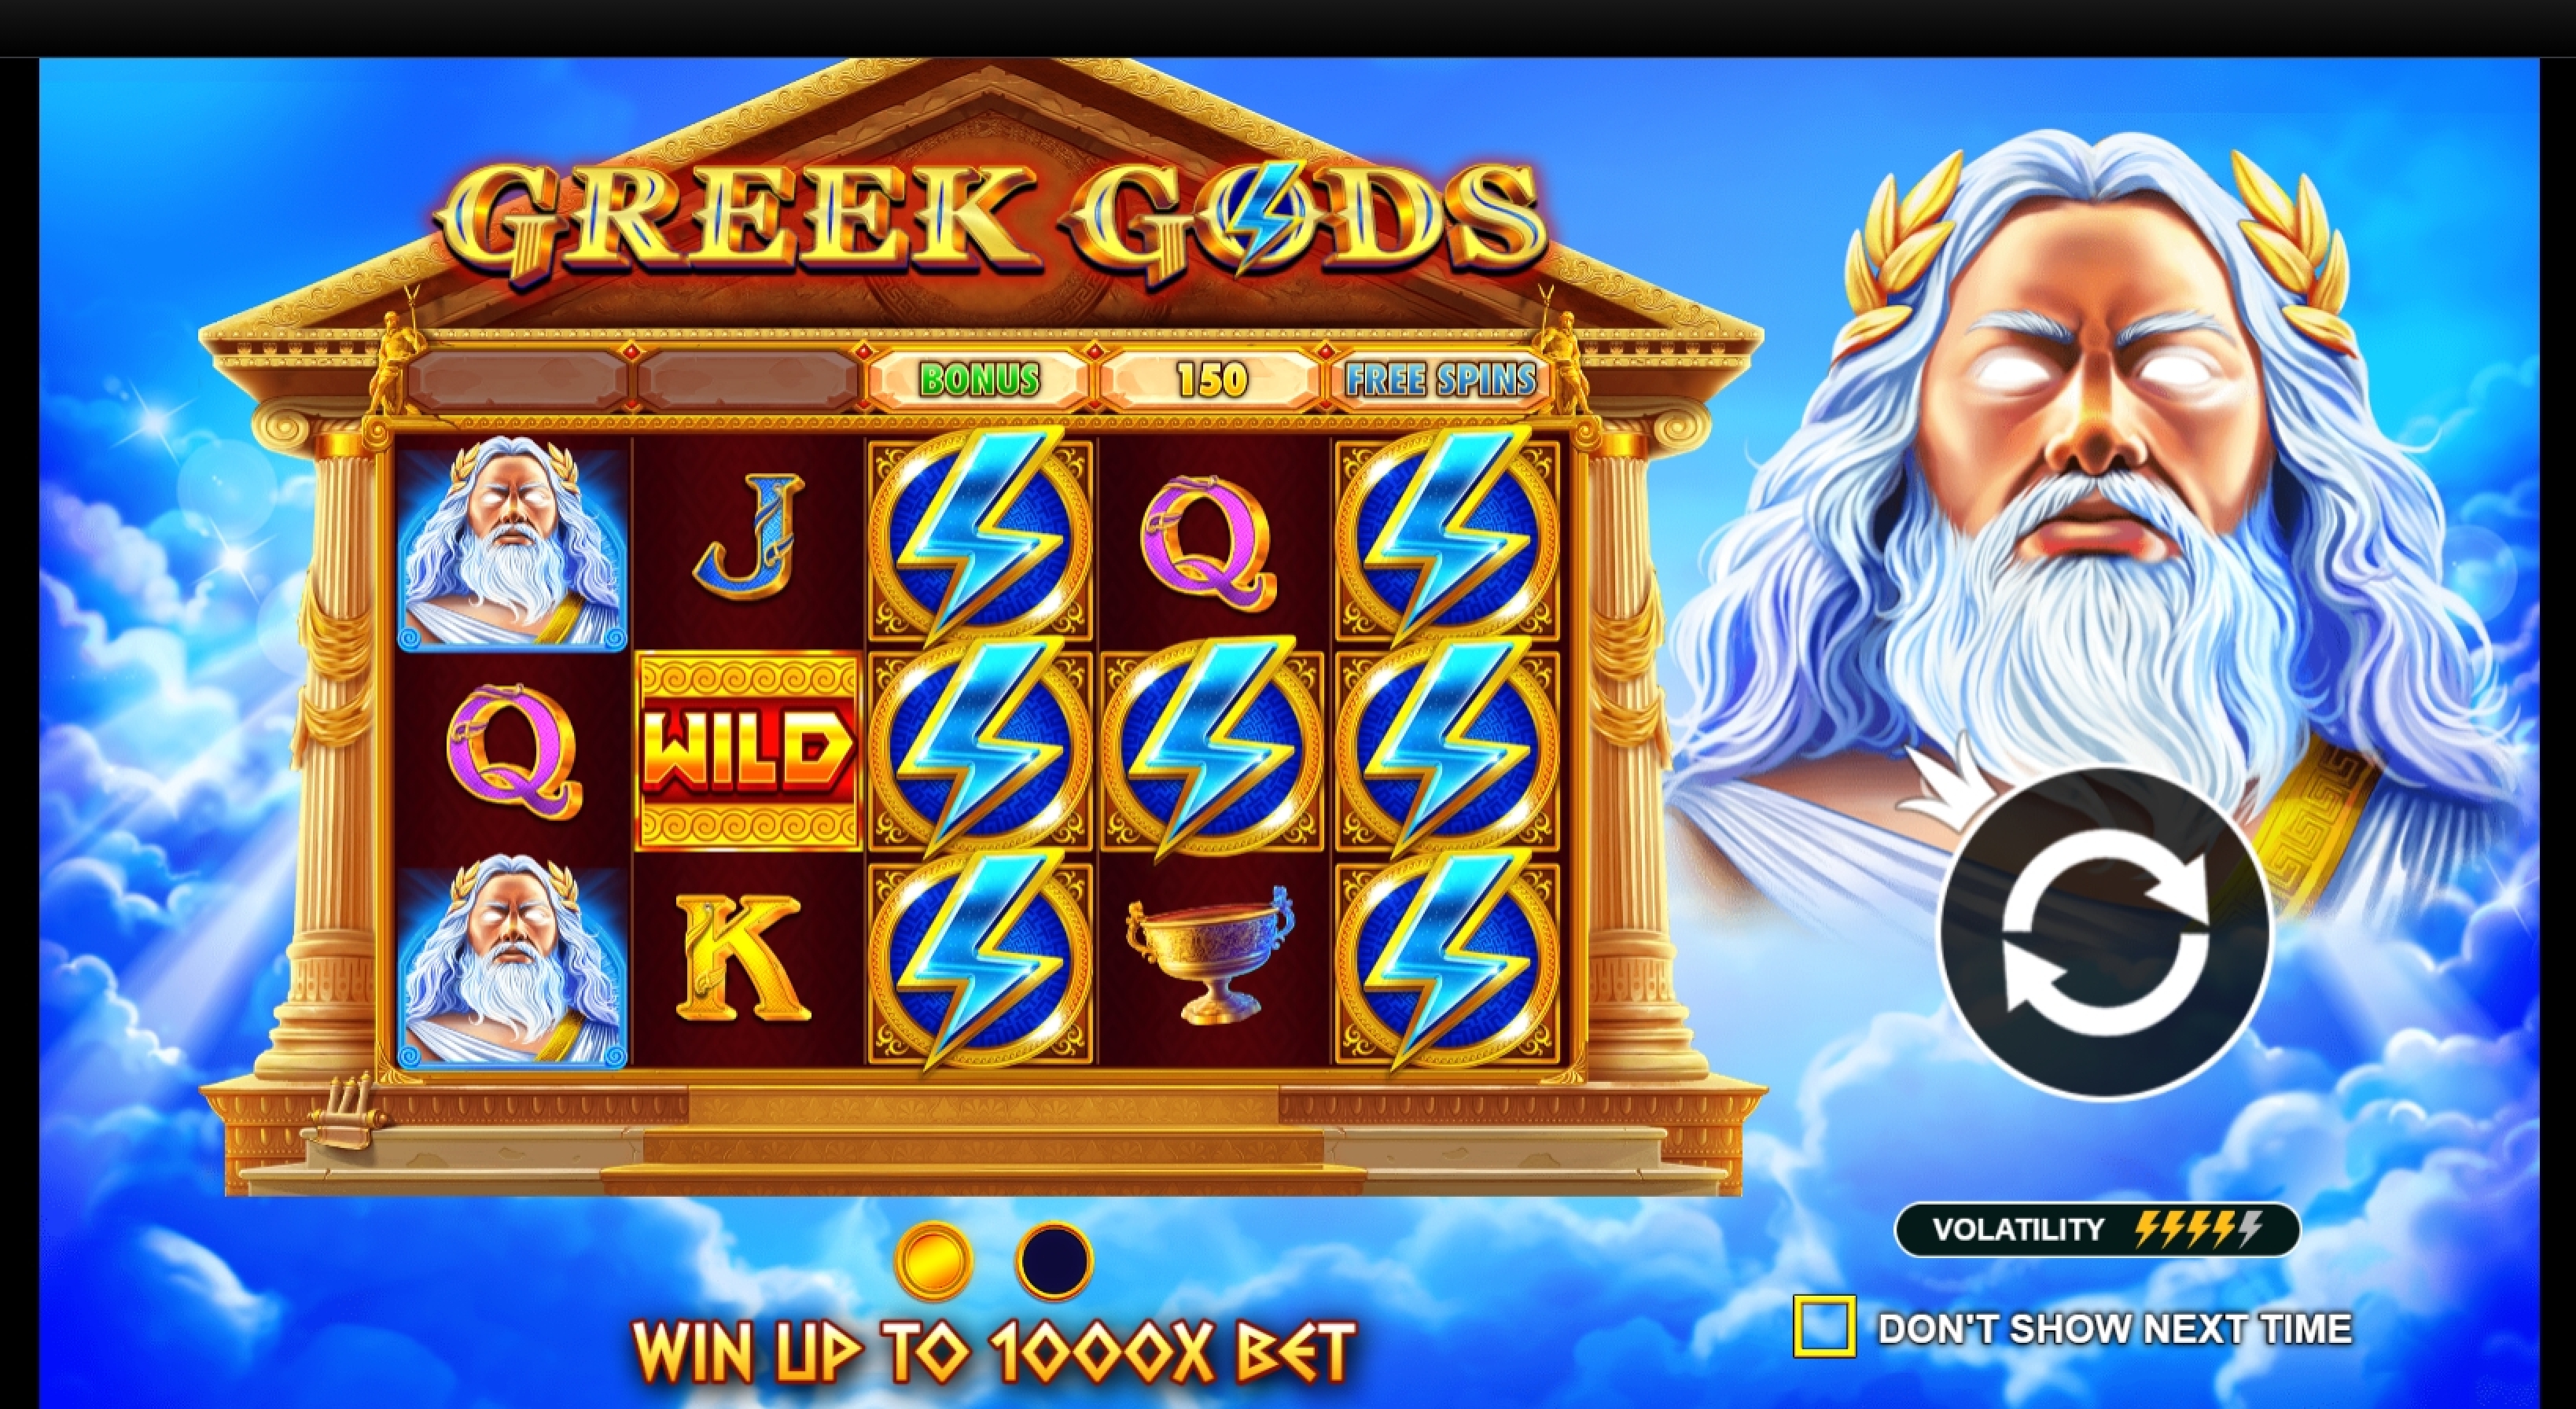 Play Greek Gods Free Casino Slot Game by Pragmatic Play